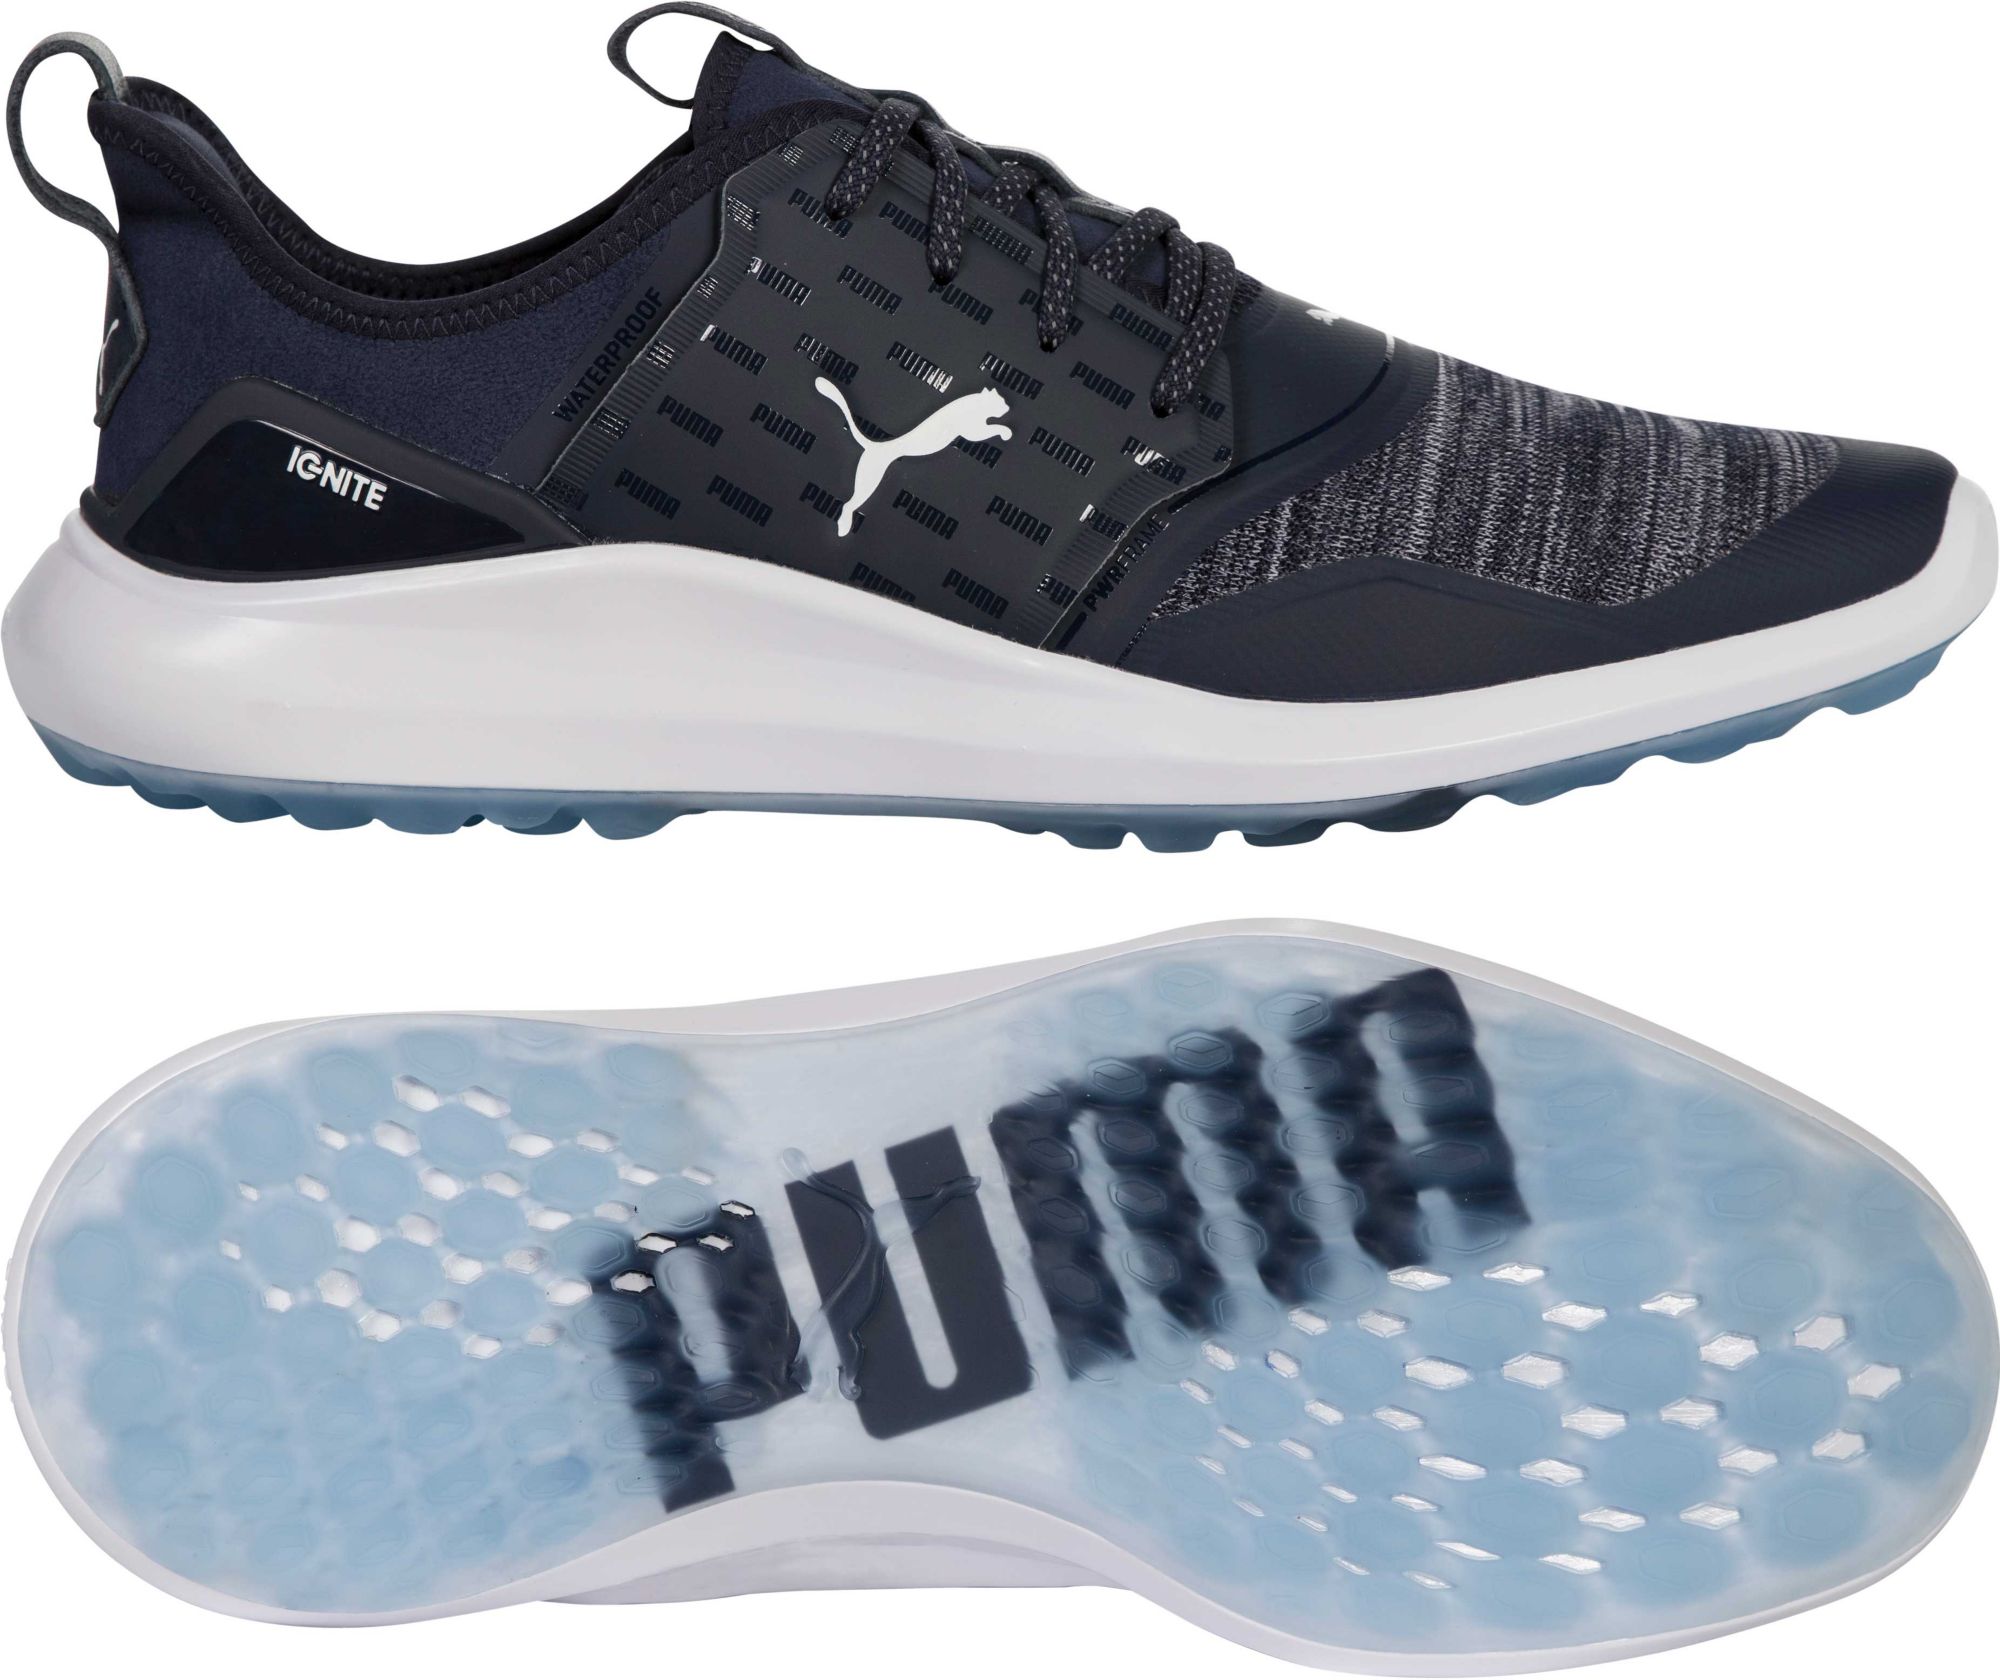 puma shoes logo images